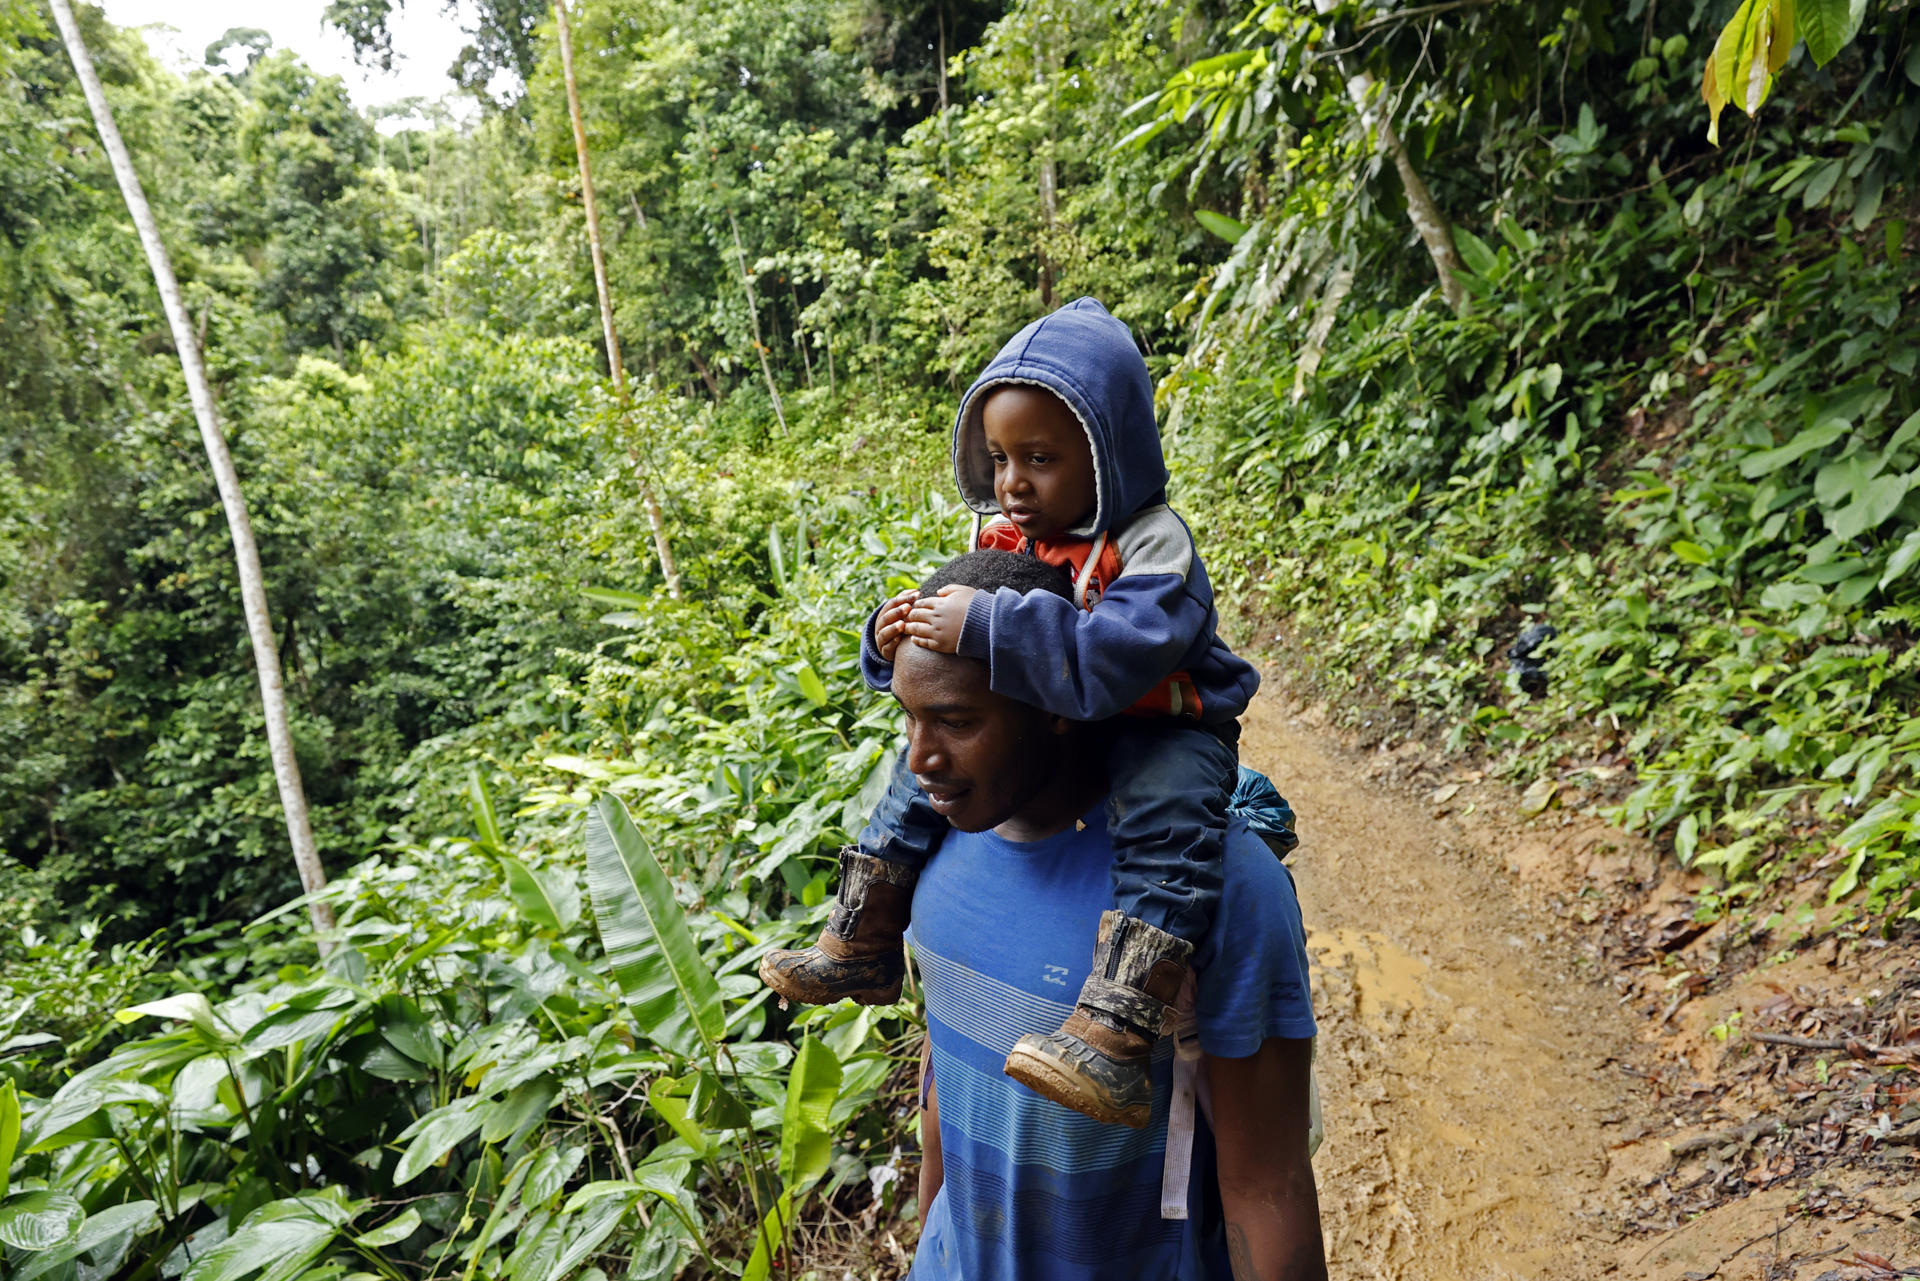 A father and his son walk through the jungle on their way to Panama through the Darién Gap, Colombia, on October 8, 2022. EFE FILE/ Mauricio Dueñas Castañeda